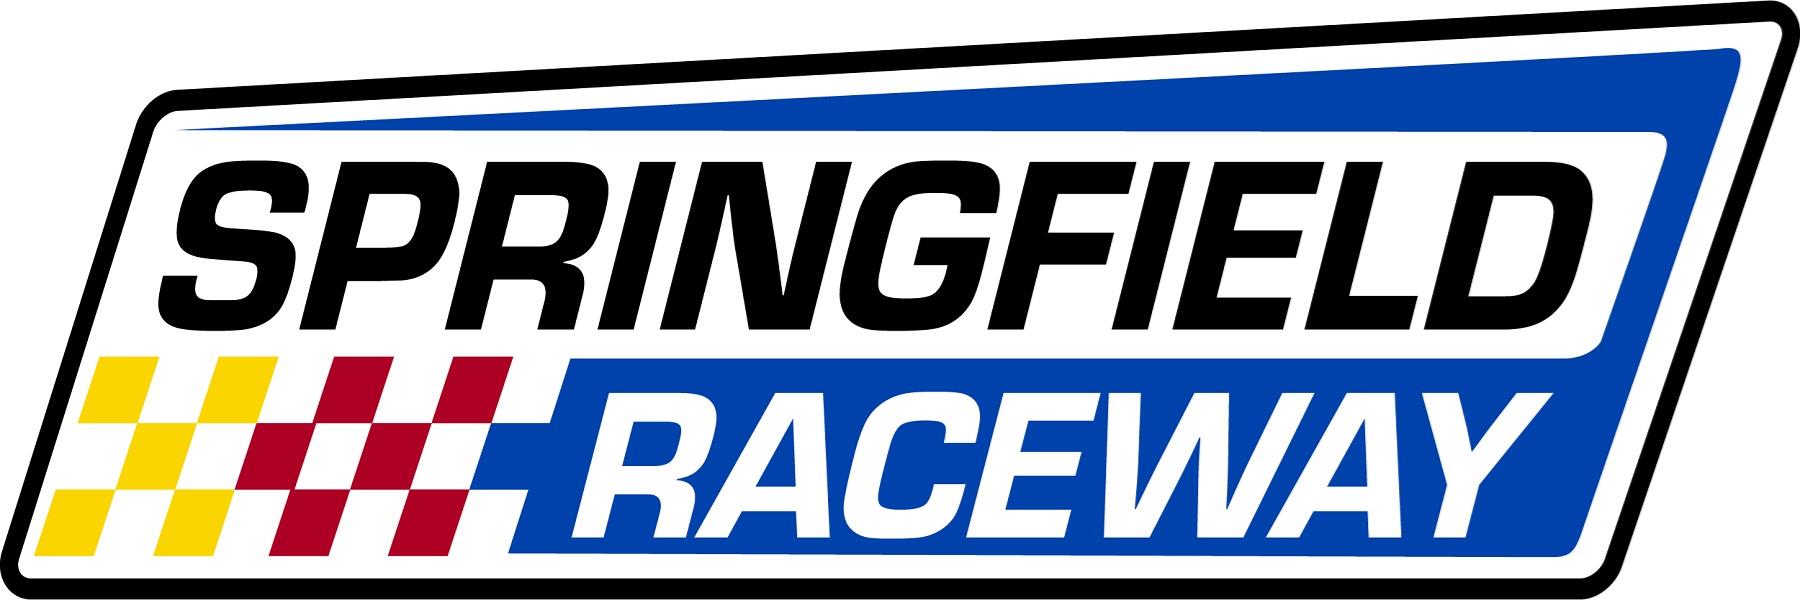 6/21/2022 - Springfield Raceway